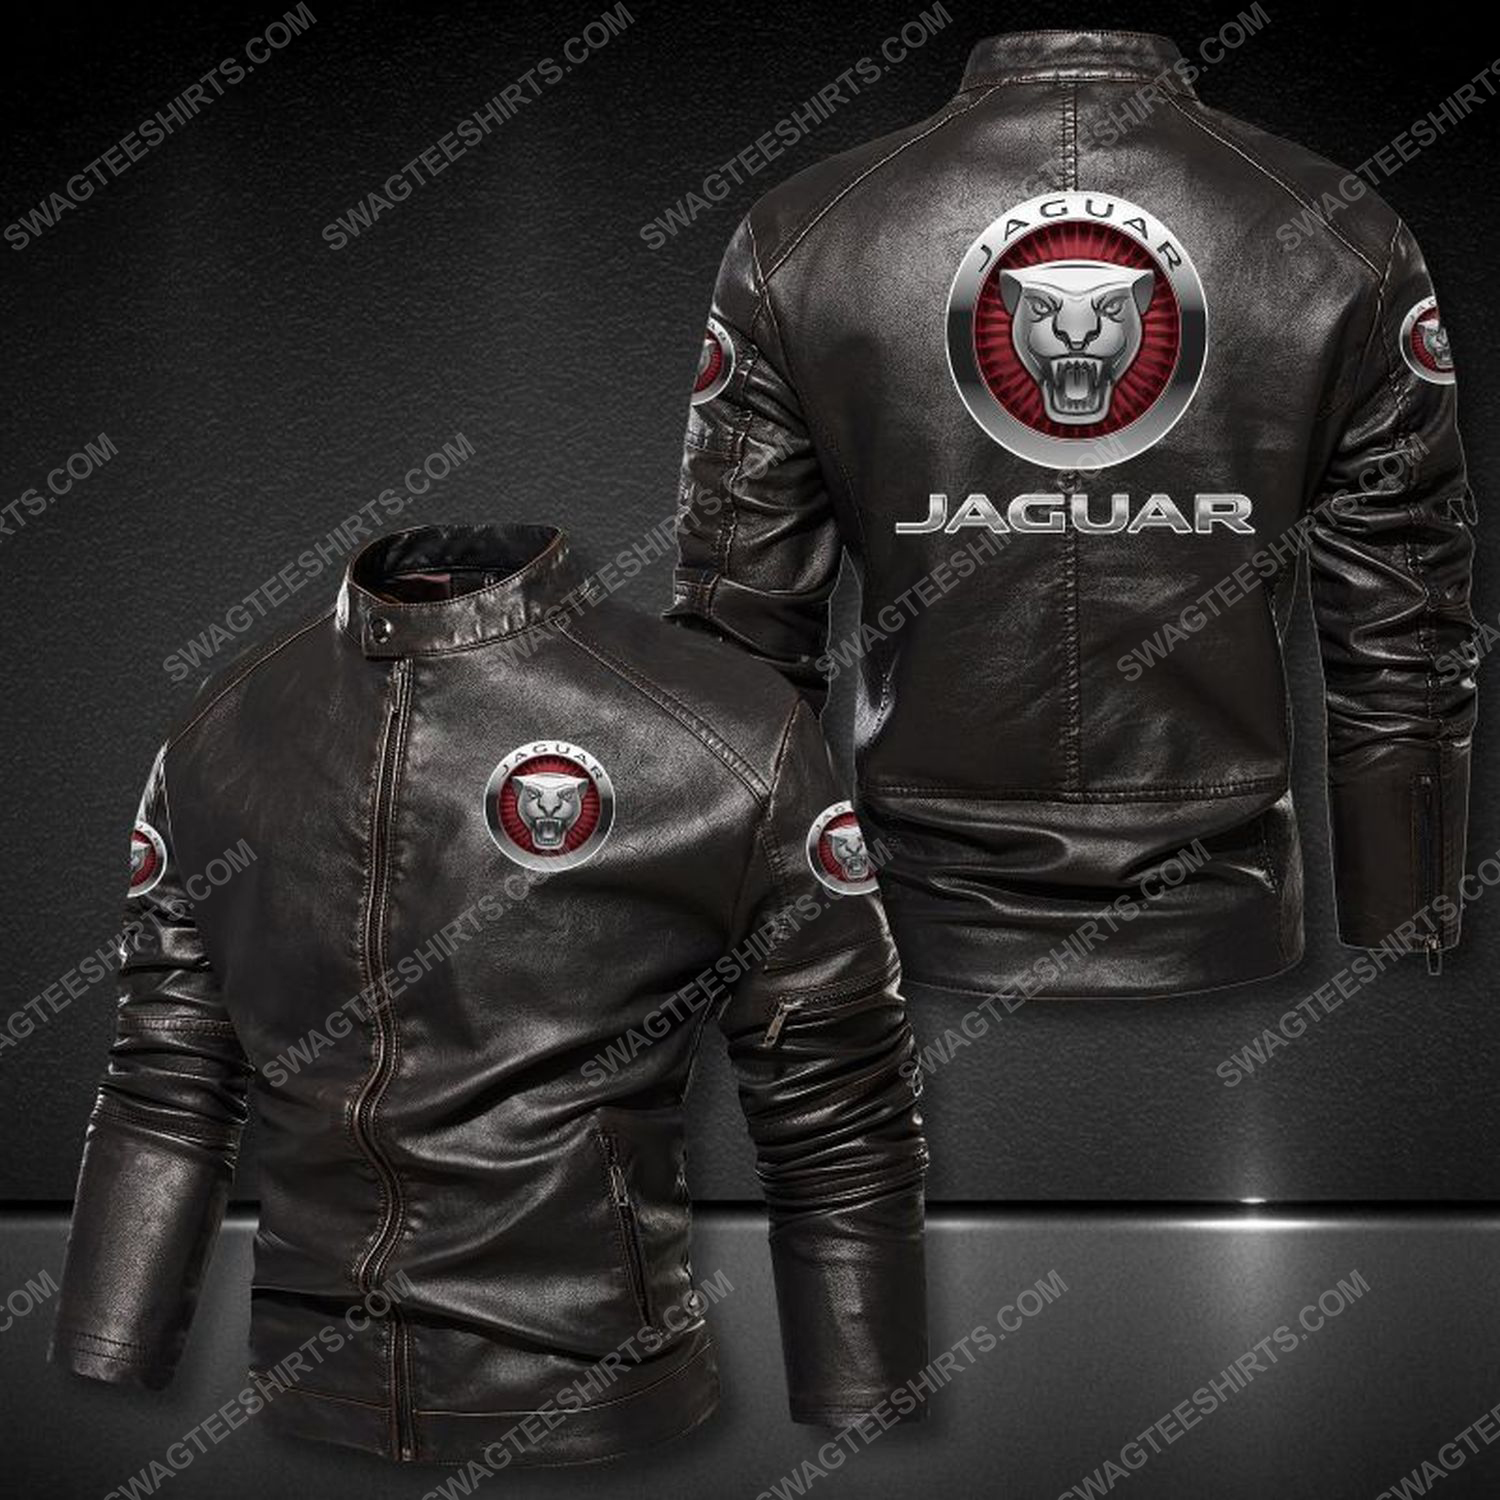 Jaguar sports cars racing leather jacket 1 - Copy